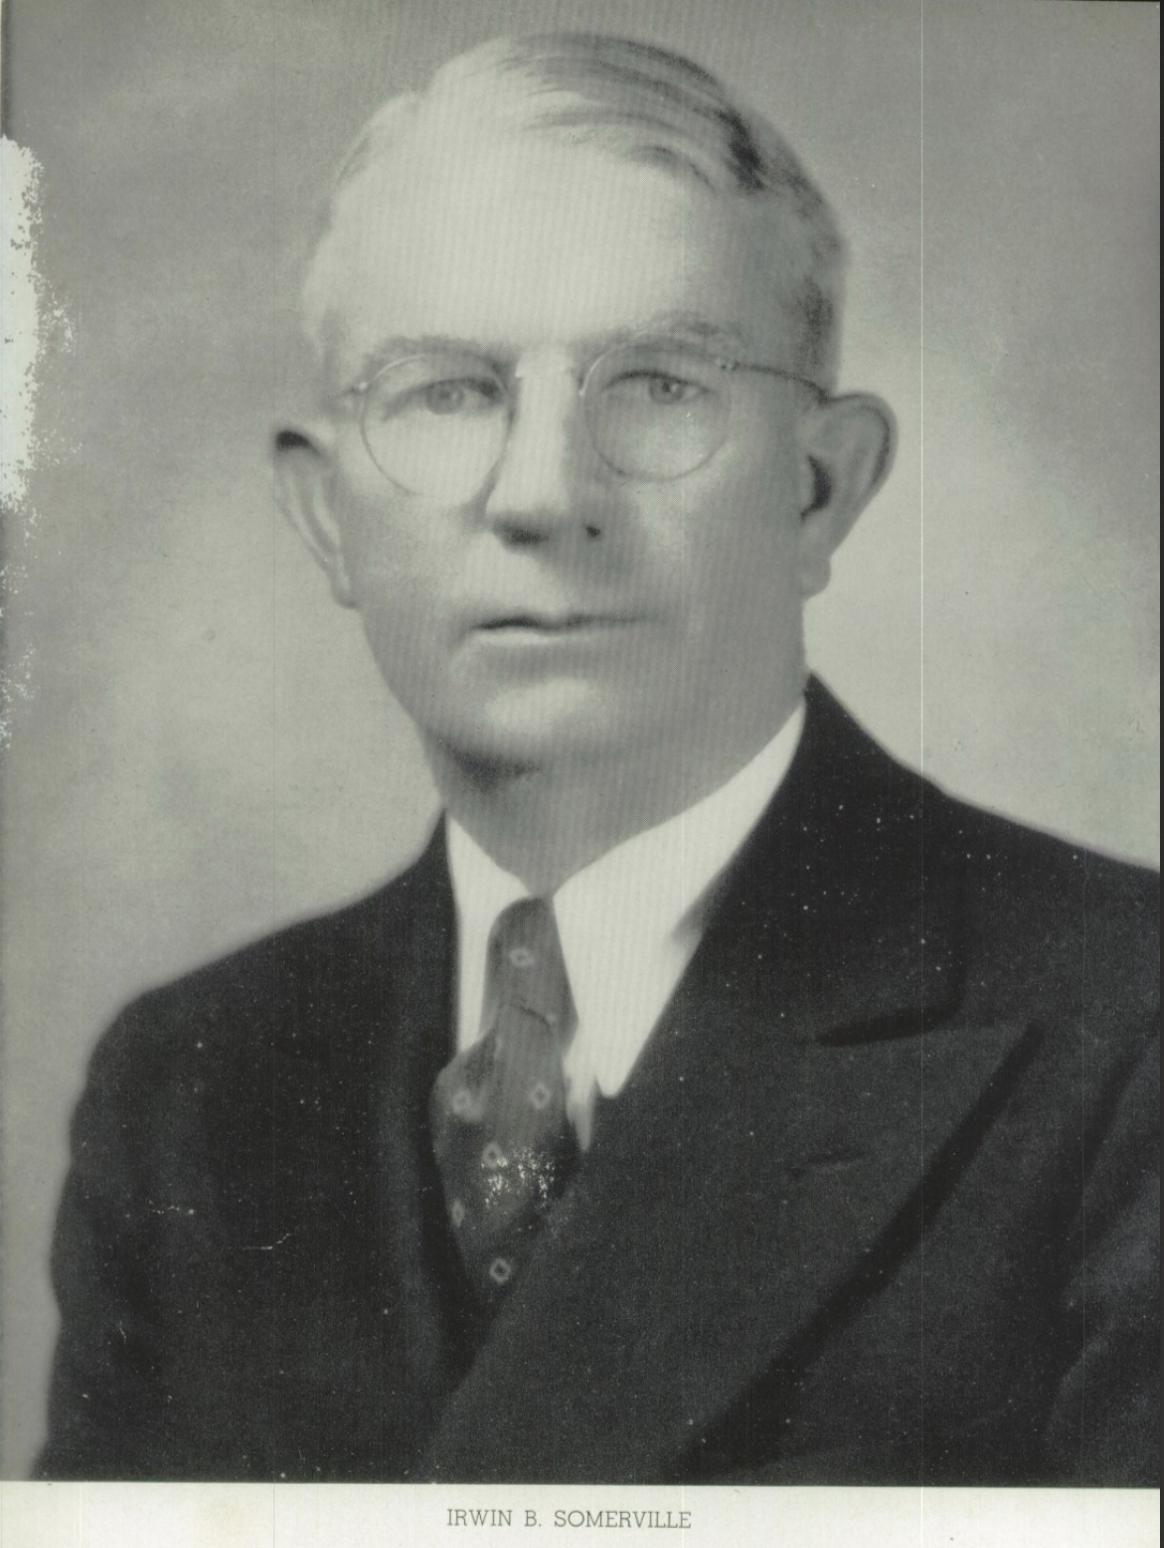 Irwin B. Somerville   1915-1931